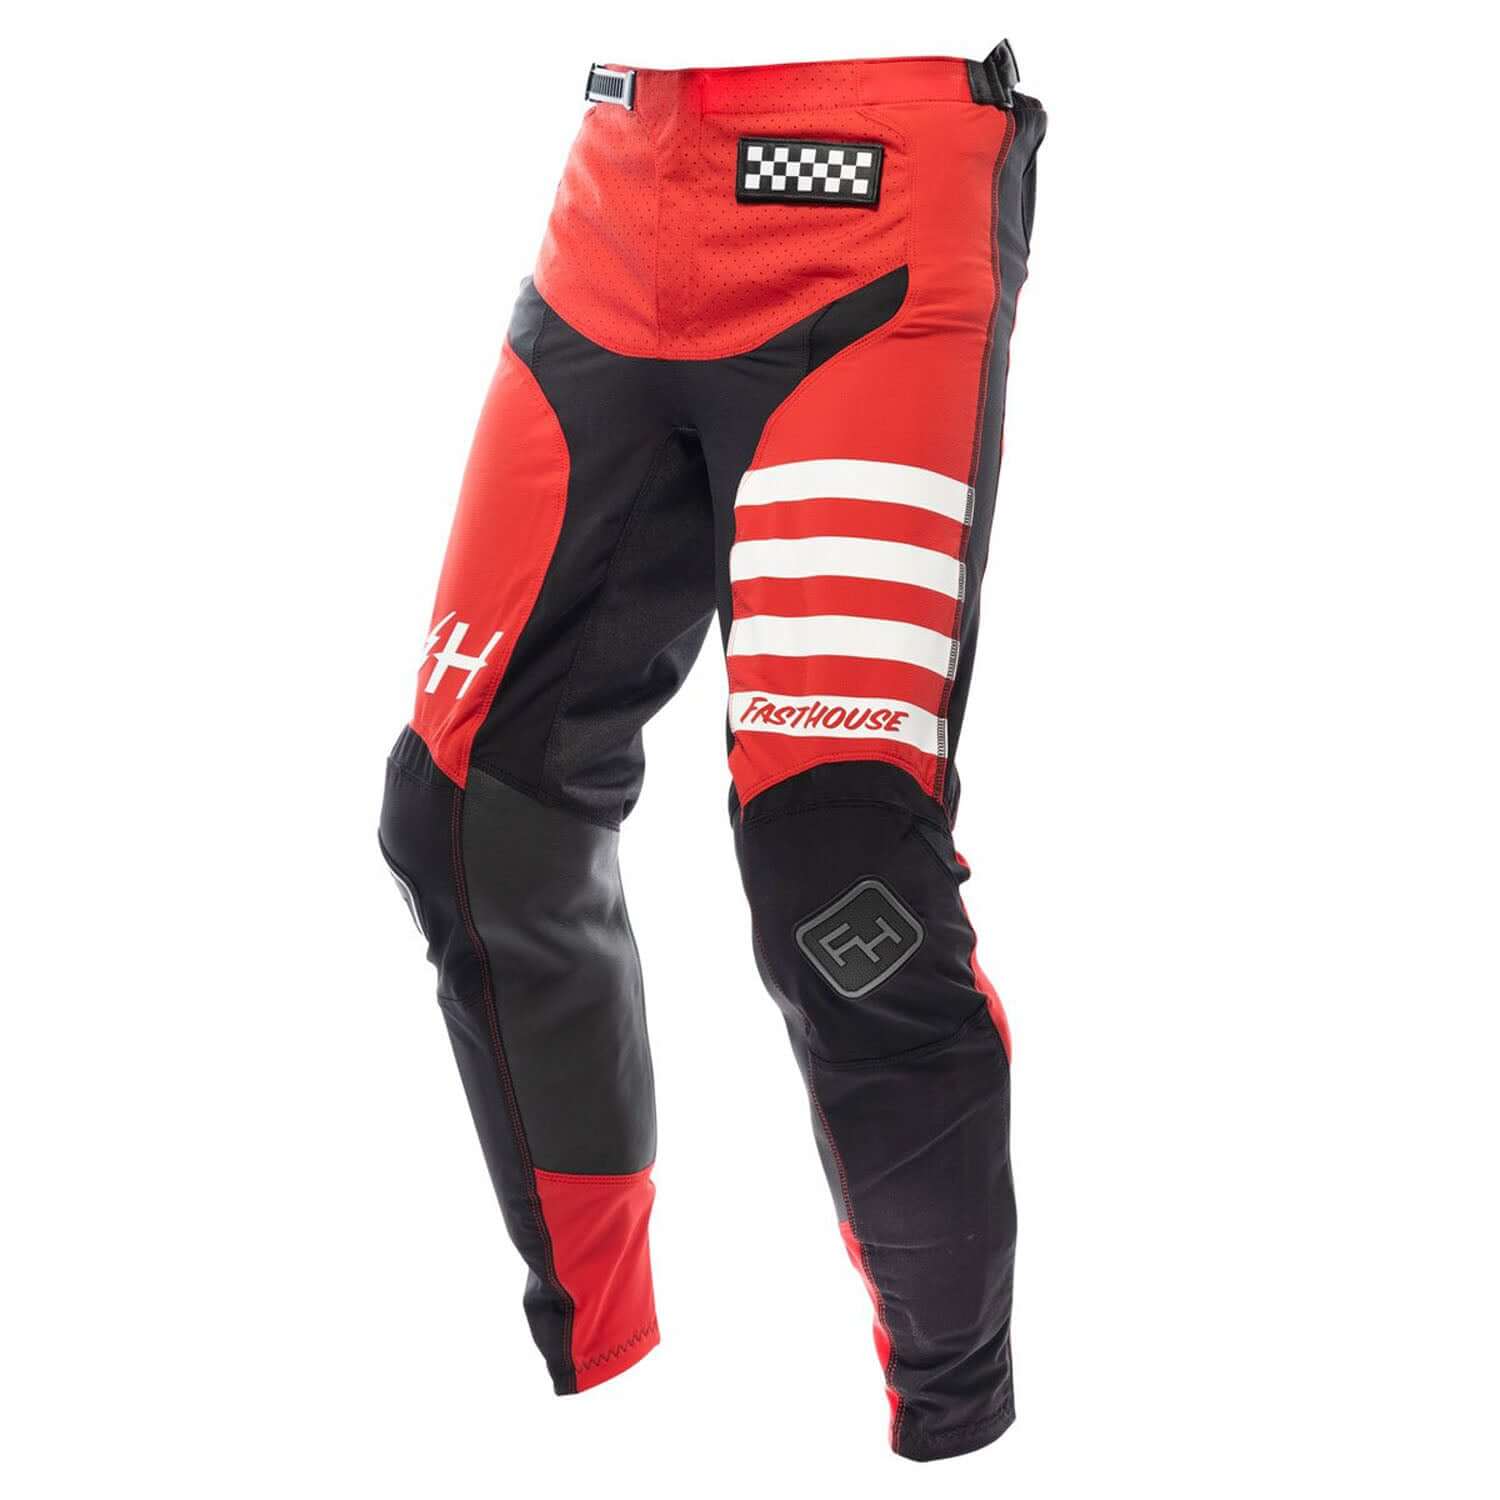 Fasthouse Elrod Pant Red/Black Bike Pants